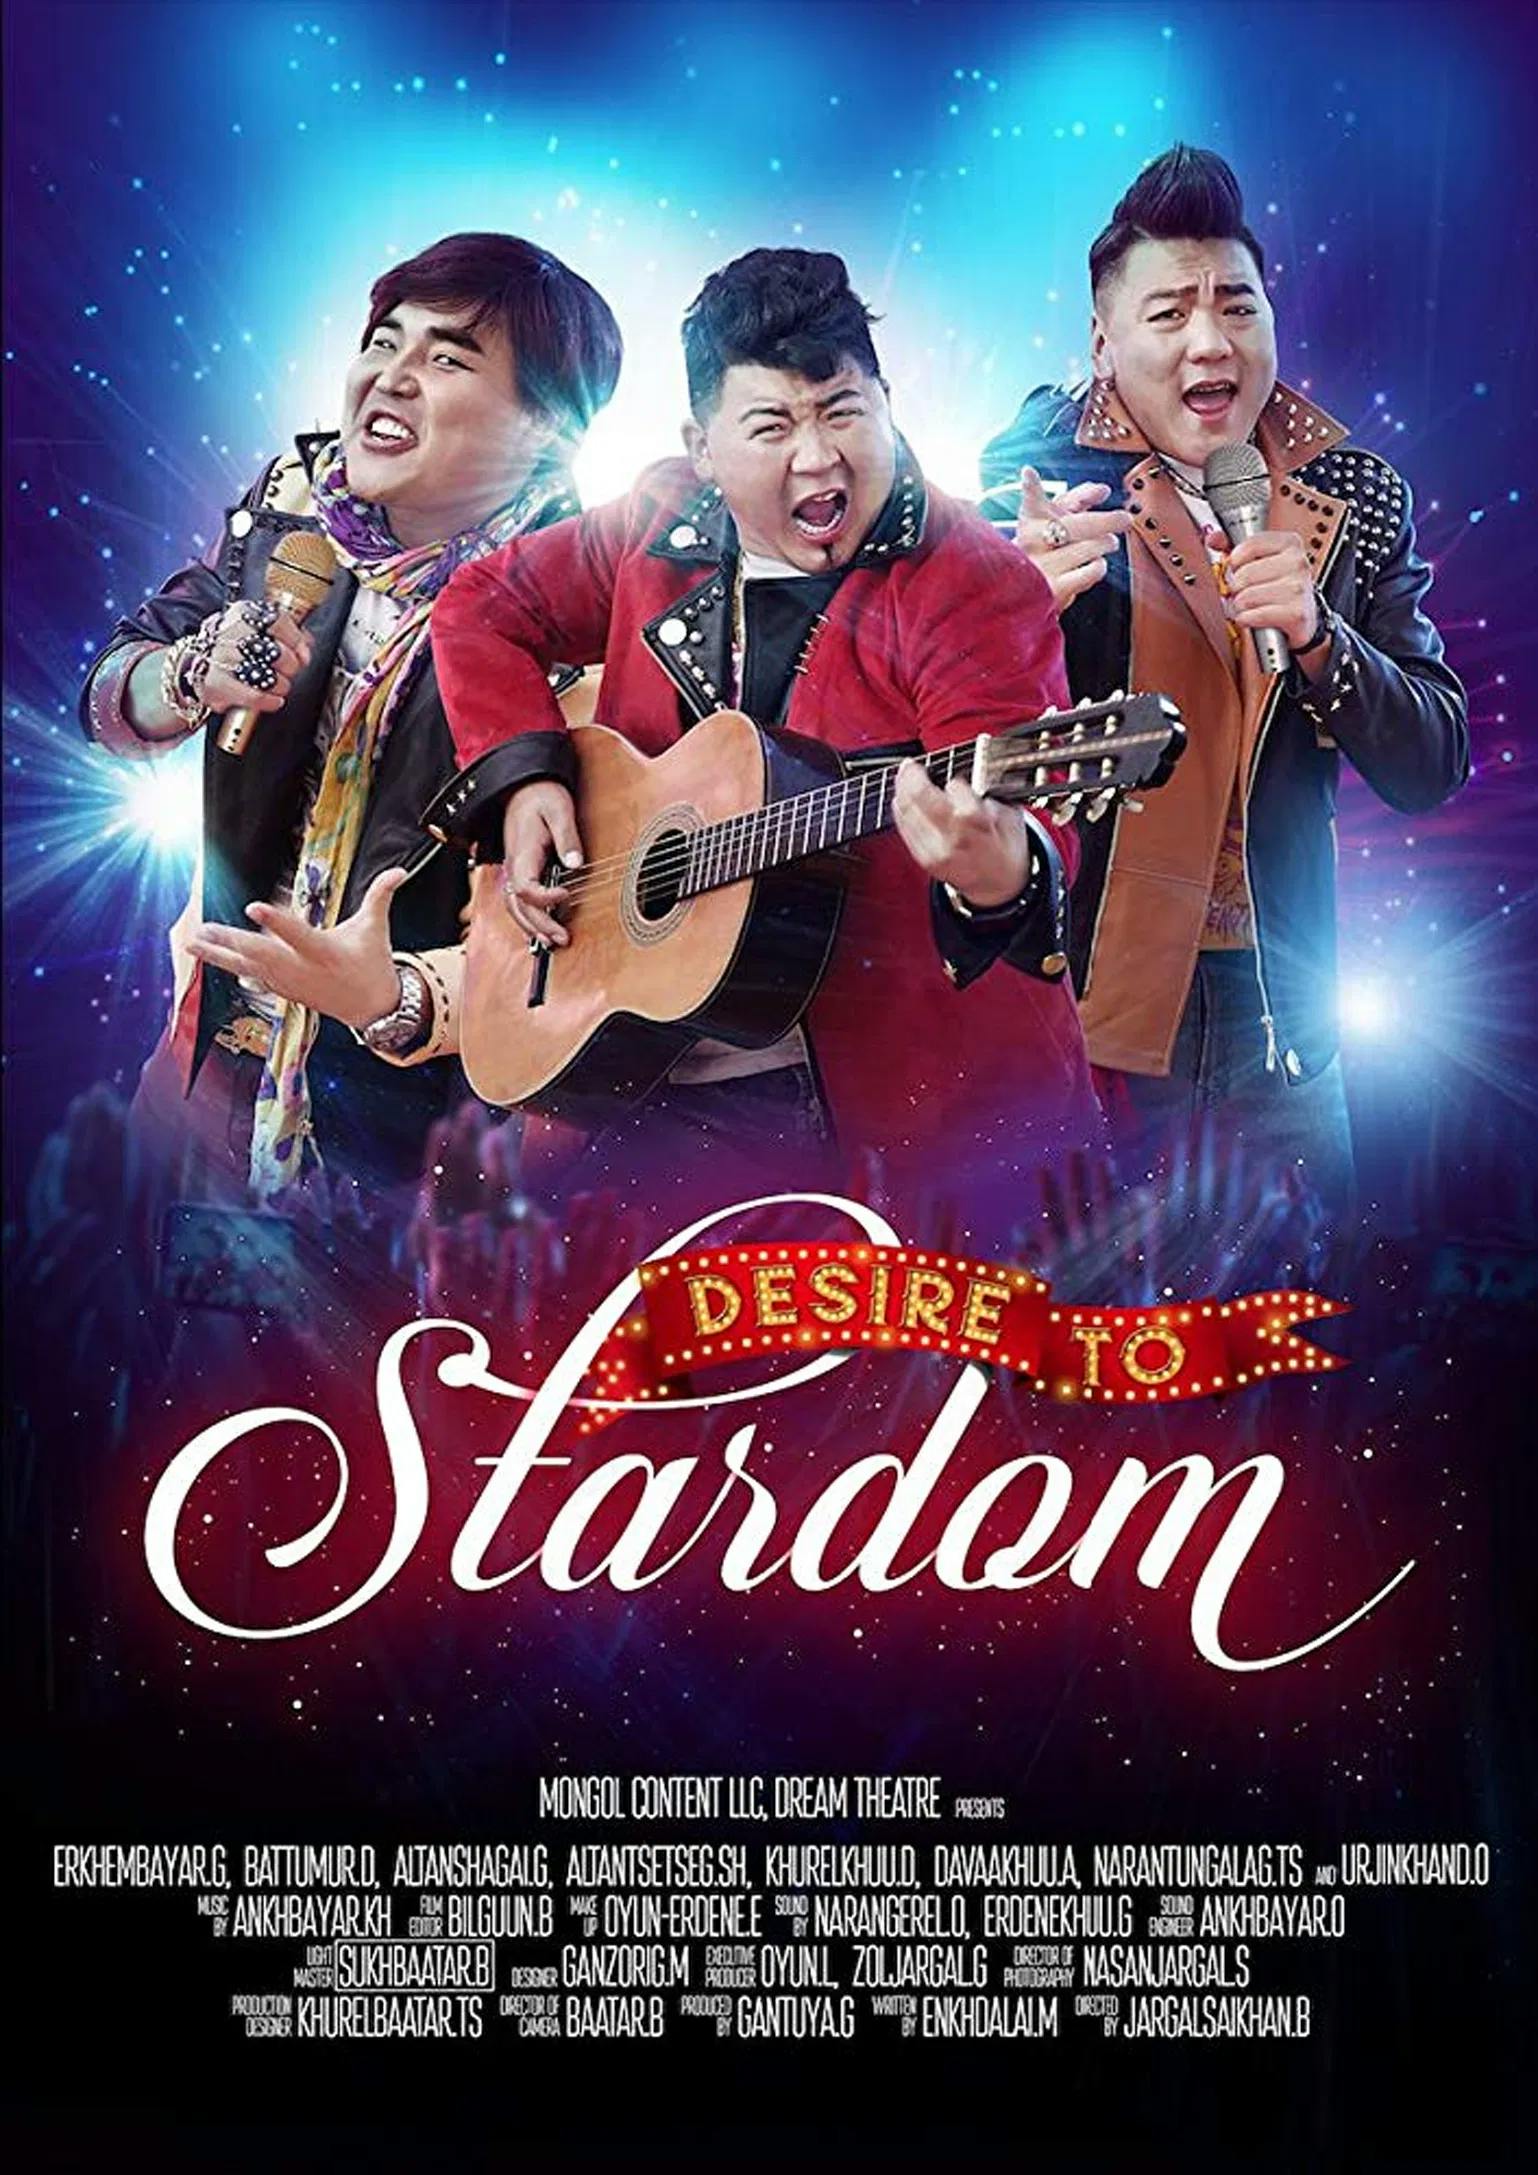 Desire to Stardom poster